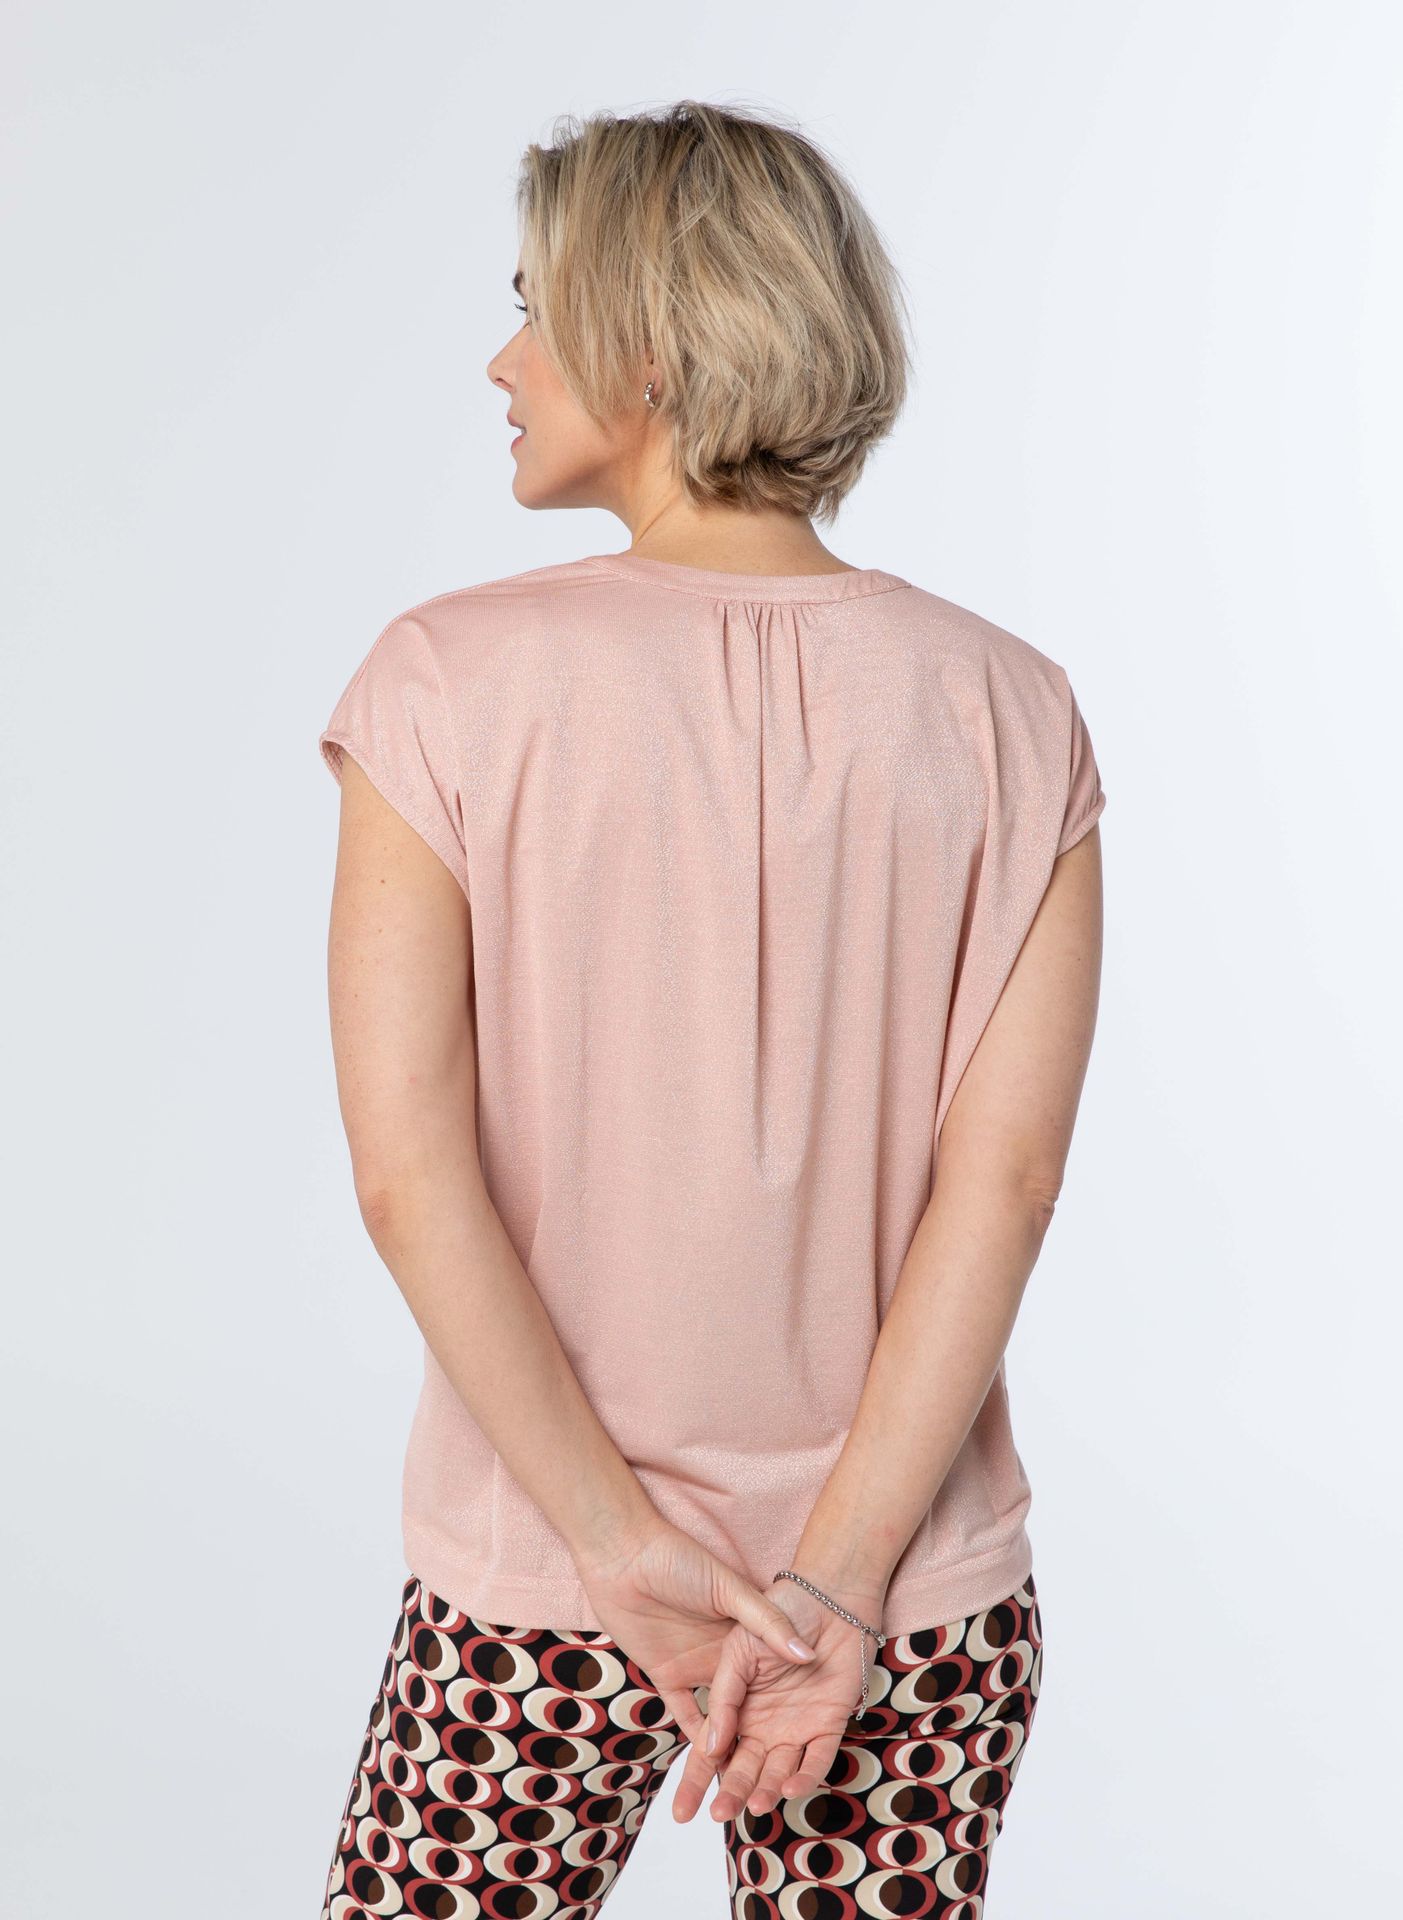 Norah Shirt roze light rose 213666-901